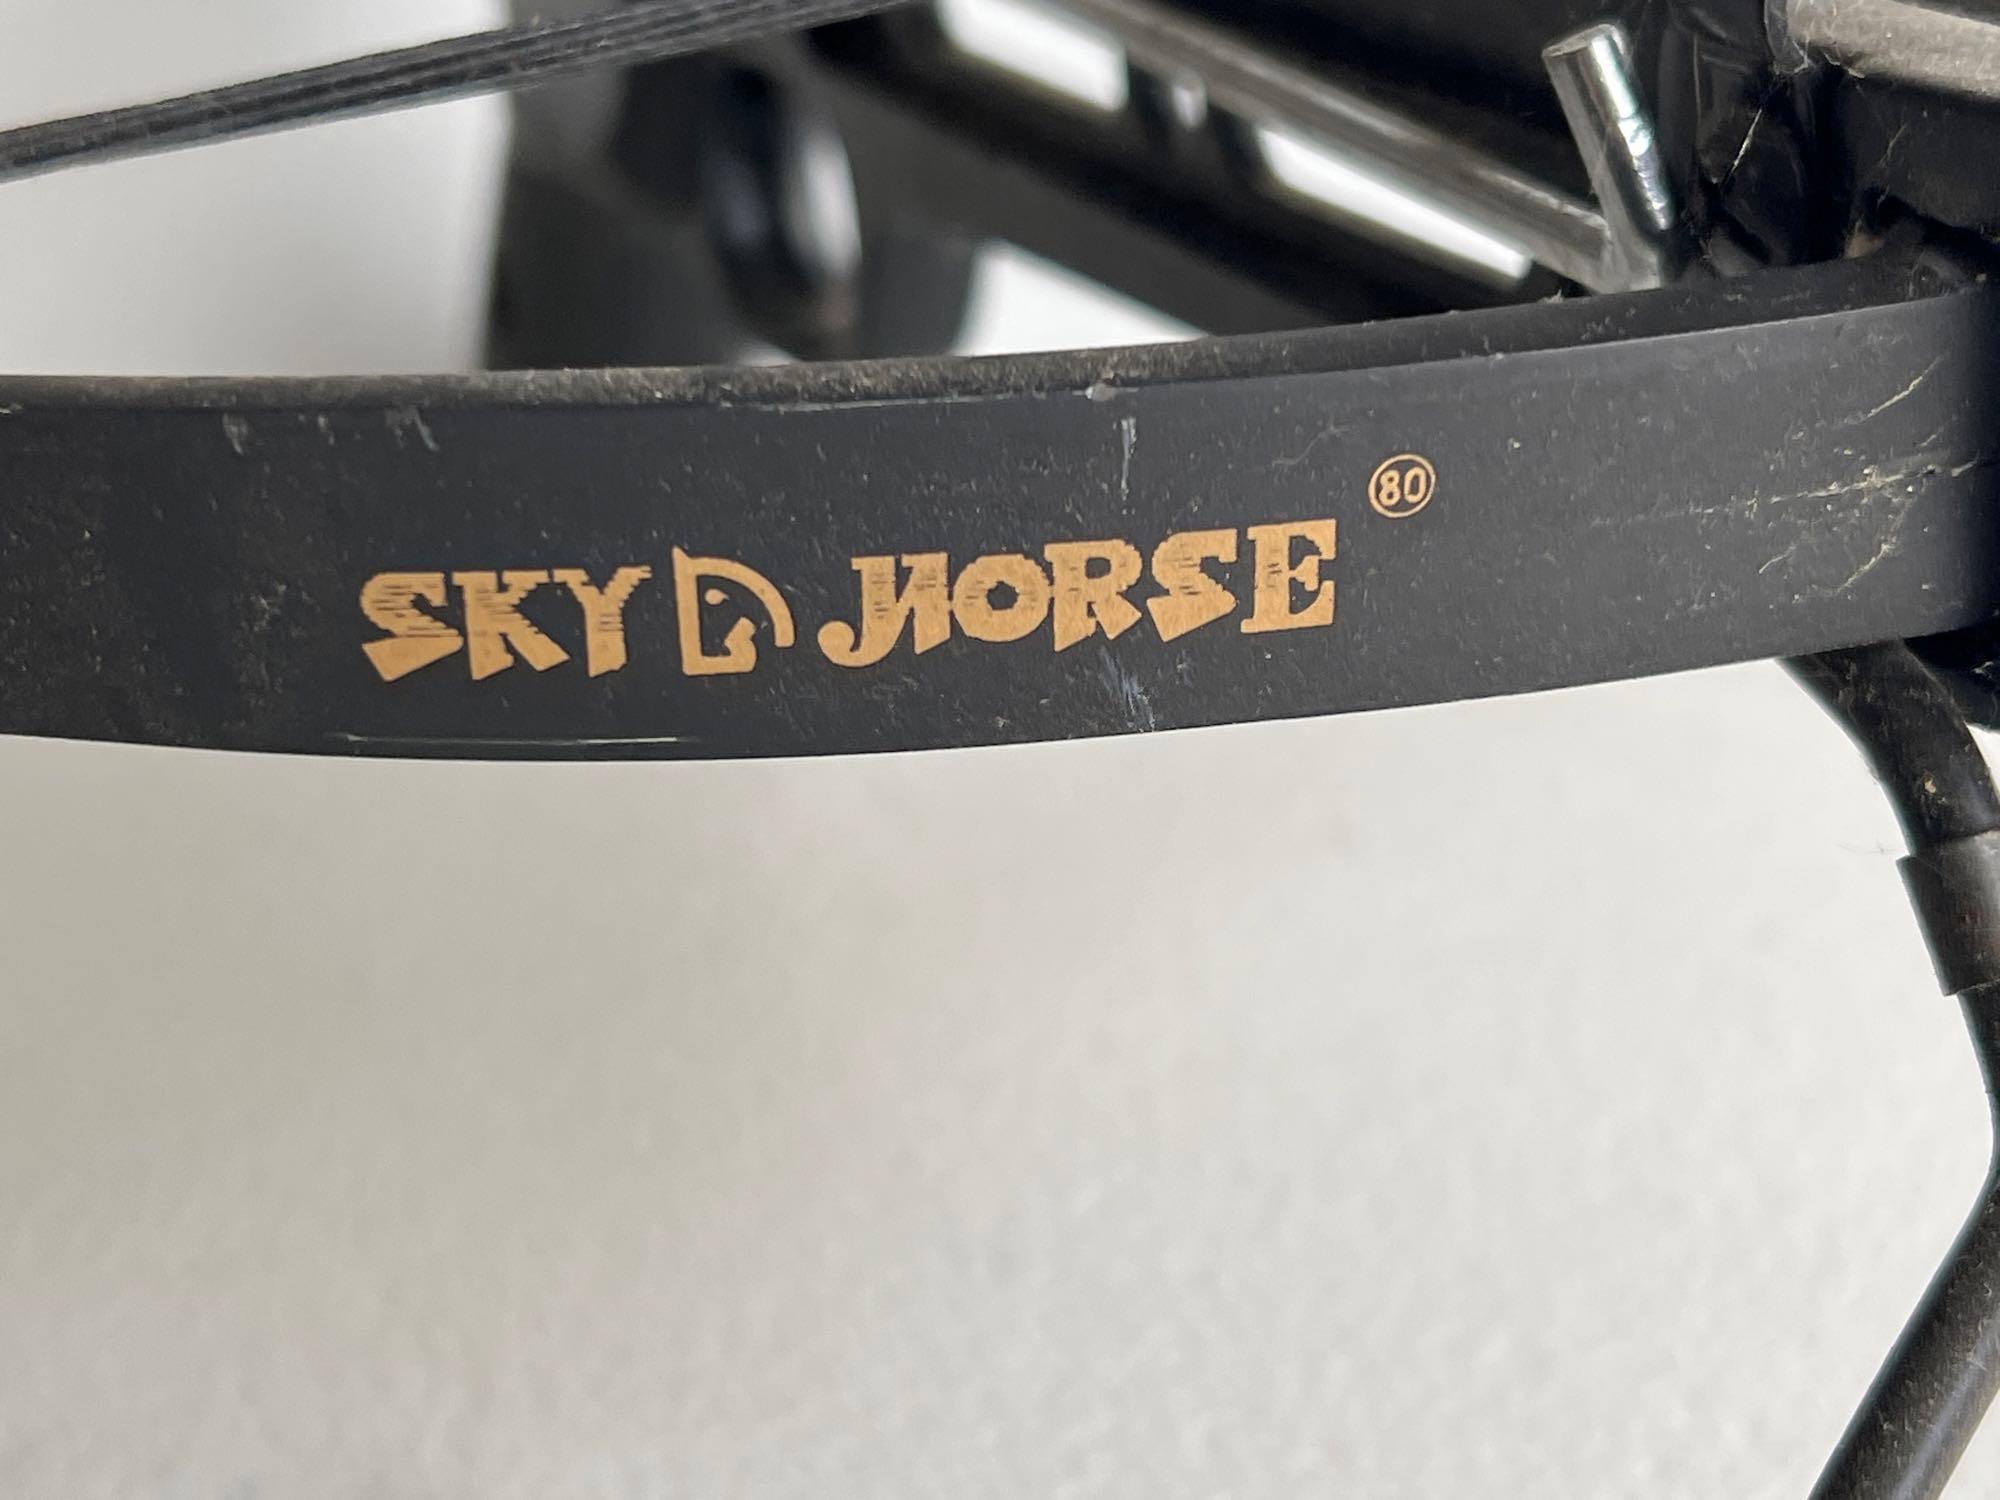 Sky Horse Pistol Crossbow with 1 Bolt